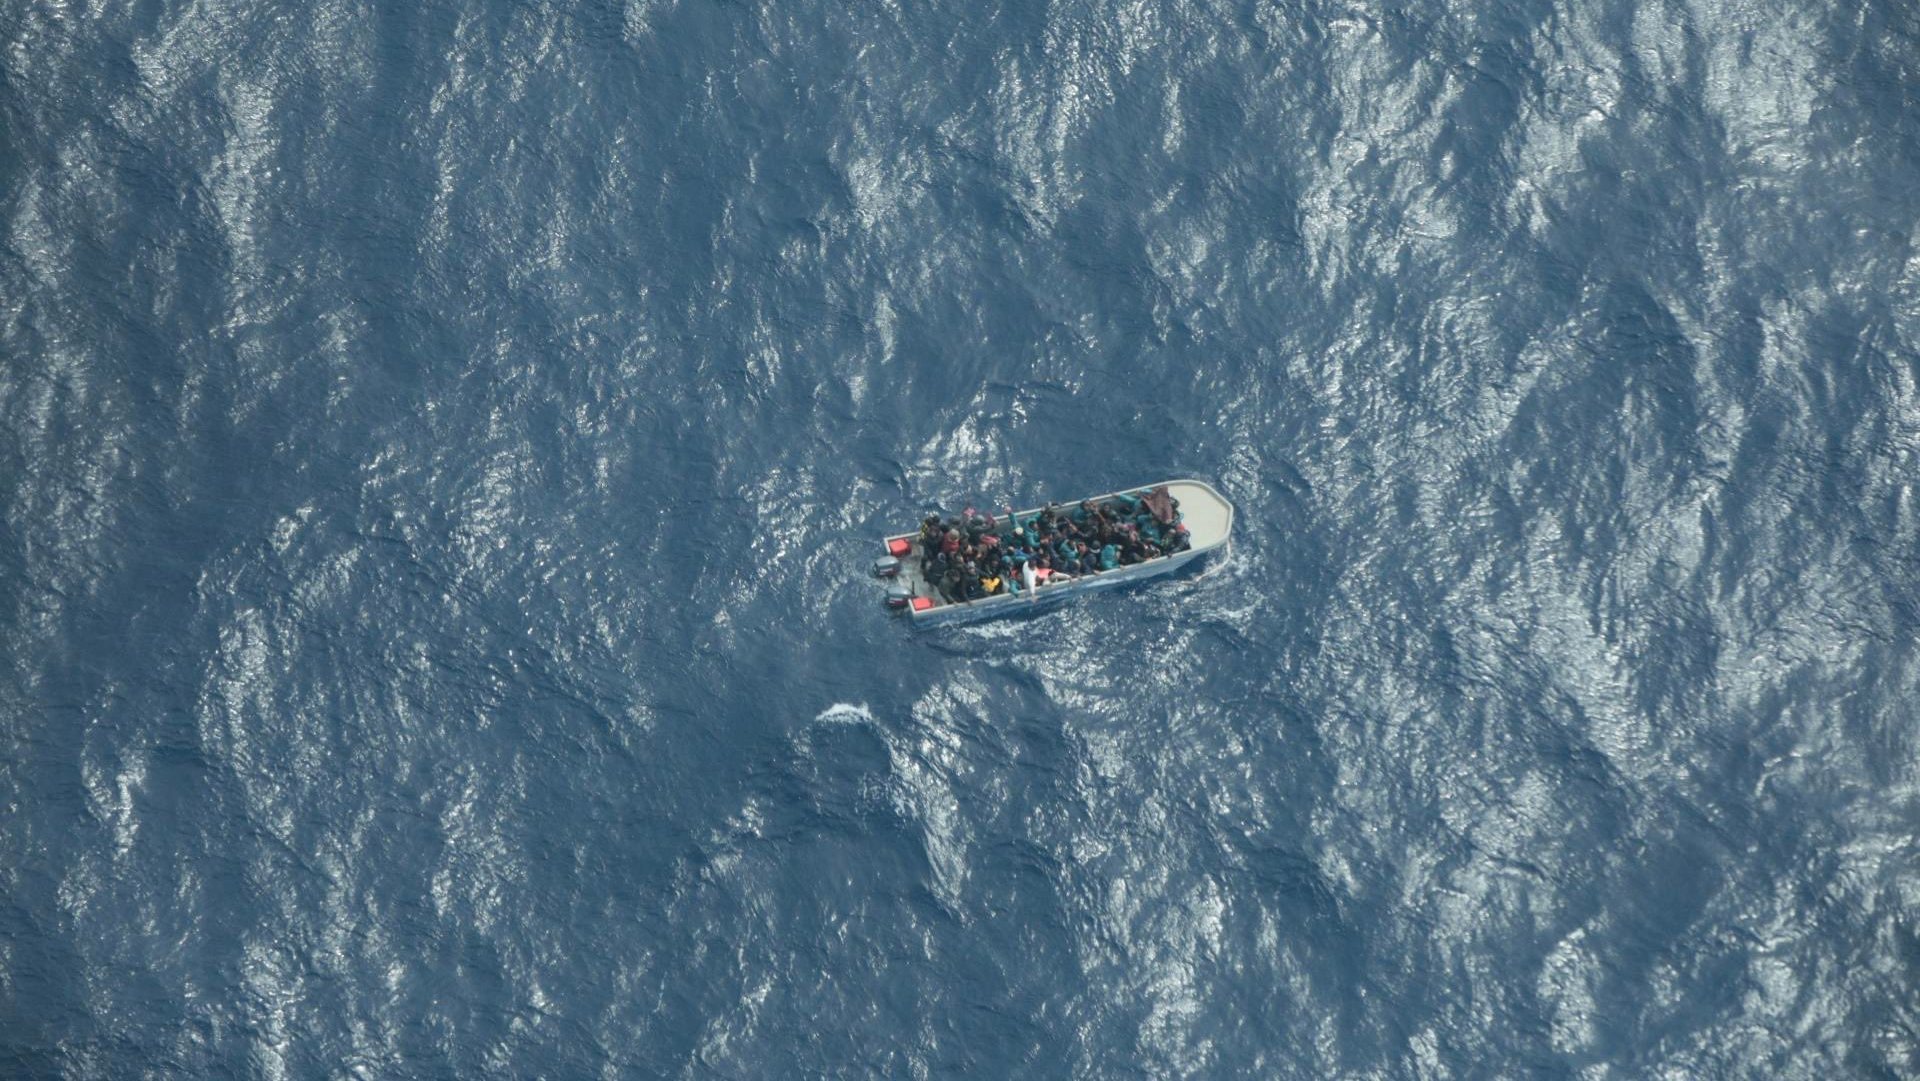 Guarda costeira de Itália resgatou 17 migrantes após naufrágio